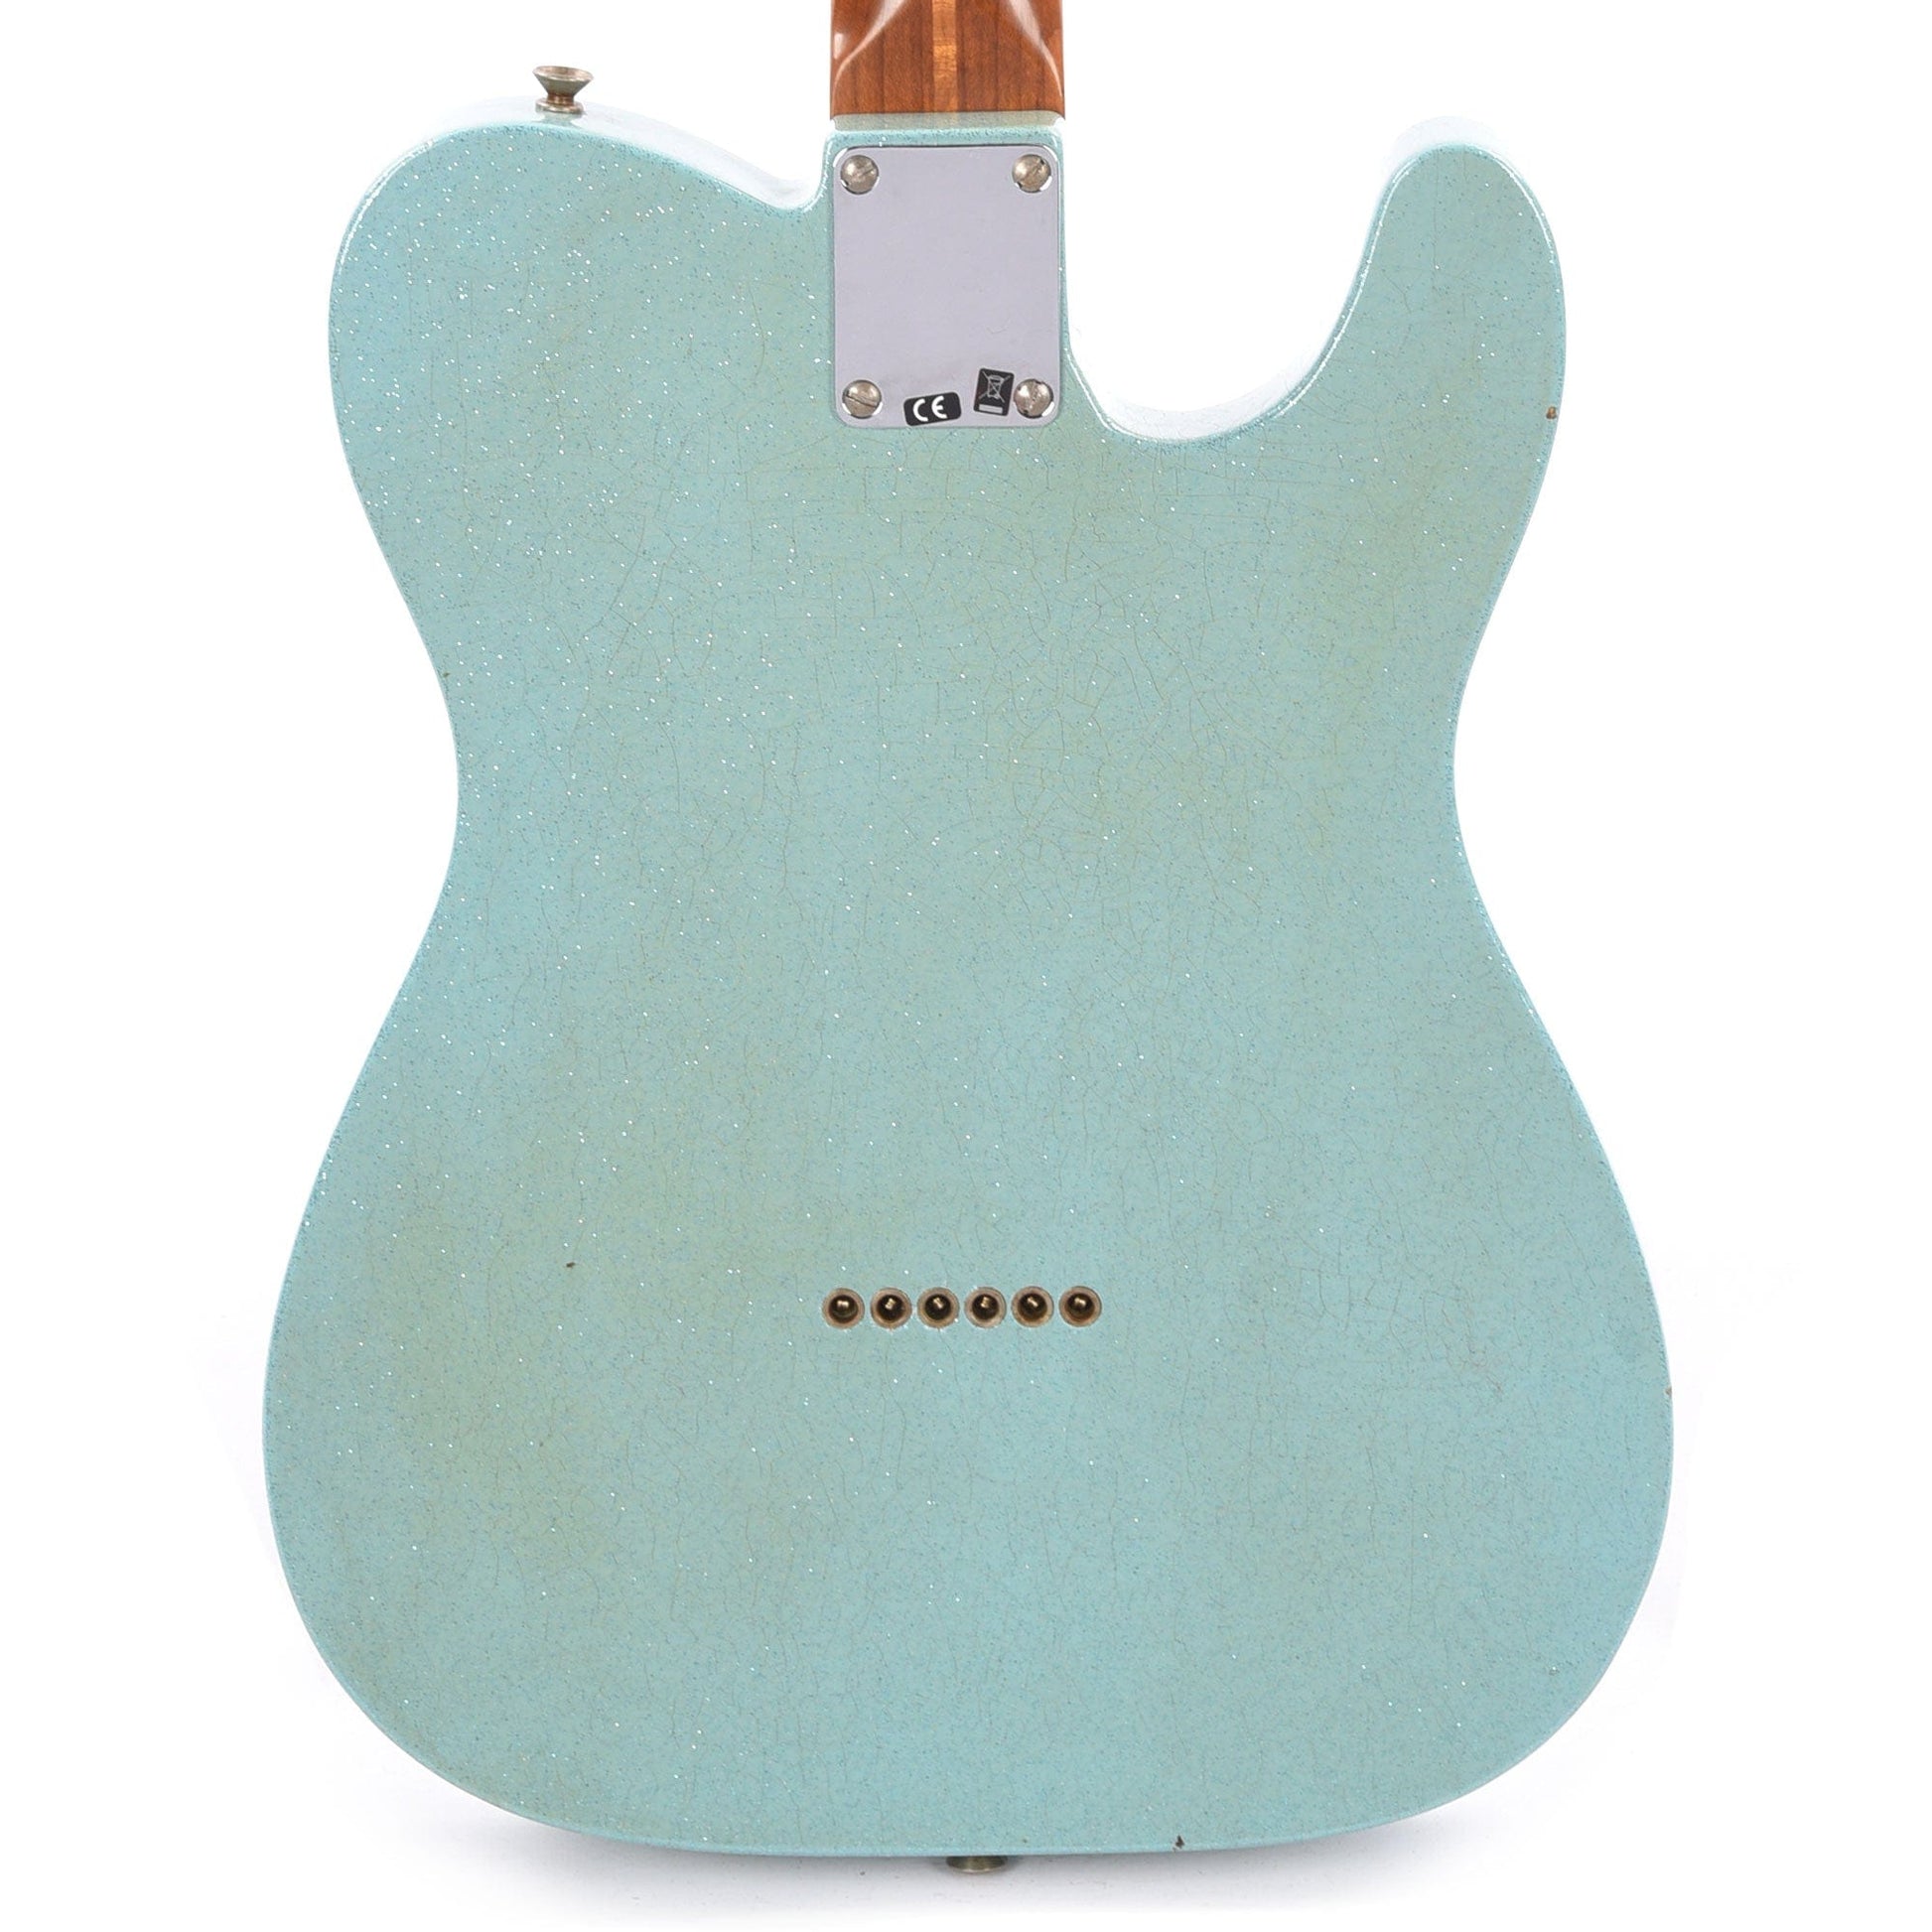 Fender Custom Shop 1952 Telecaster HS "Chicago Special" LEFTY Journeyman Aged Daphne Blue Sparkle w/Roasted Neck Electric Guitars / Solid Body